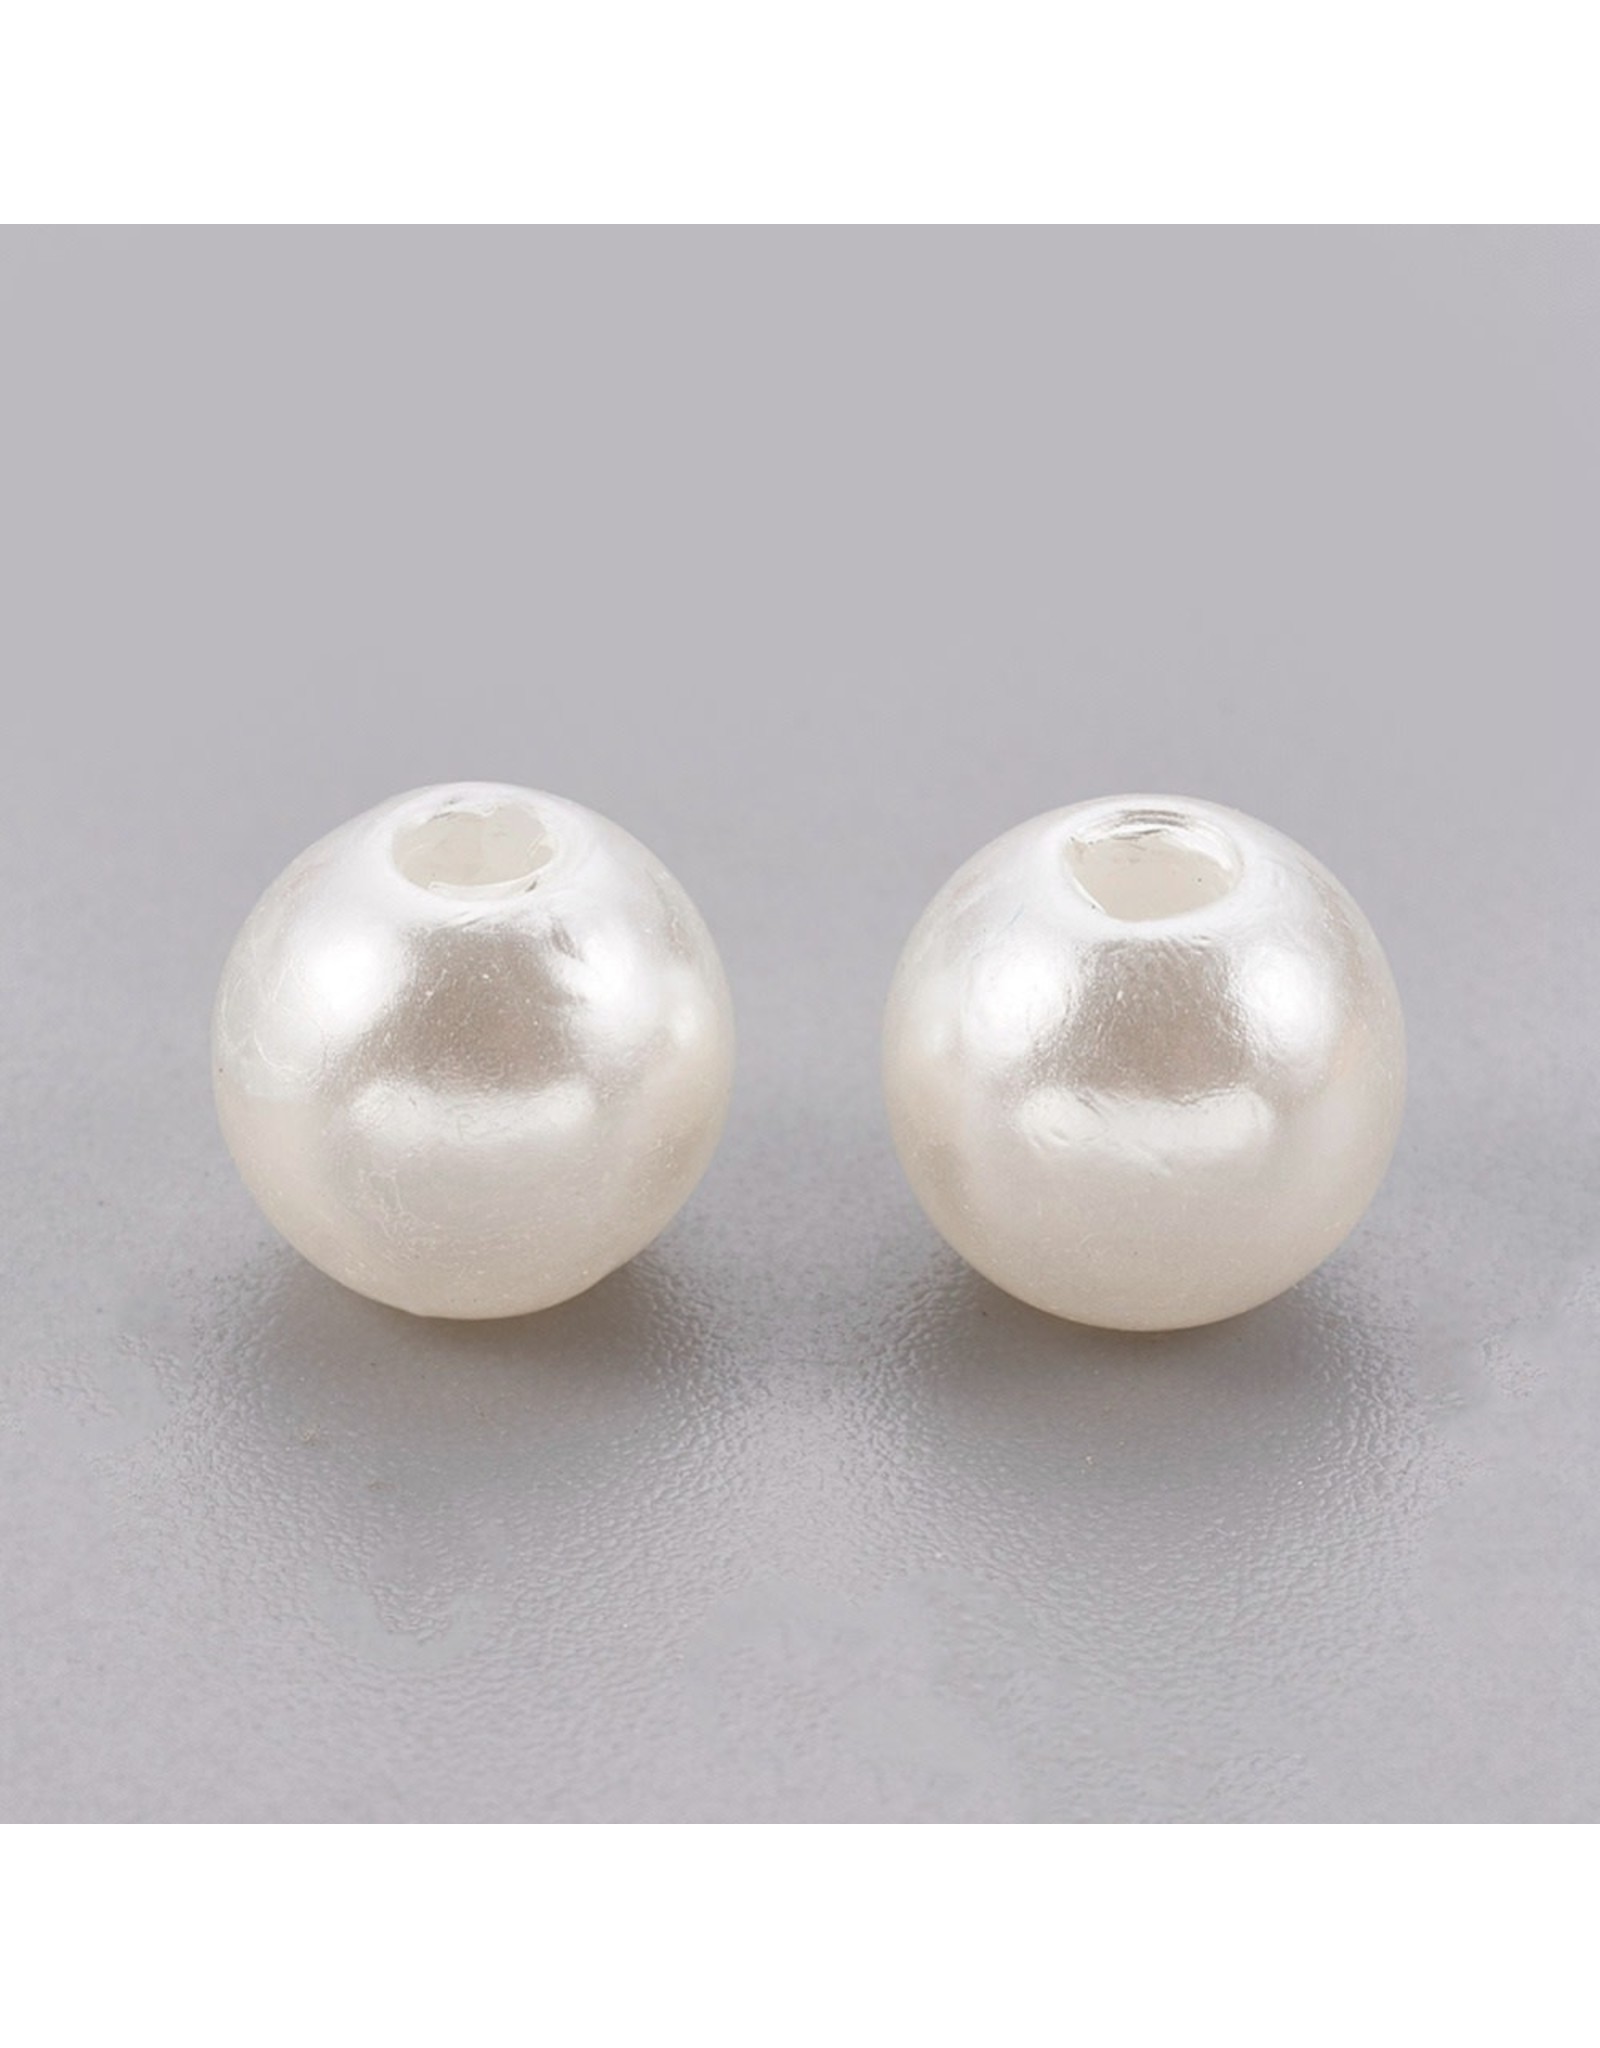 Craft Pearls  4mm Cream  x1000